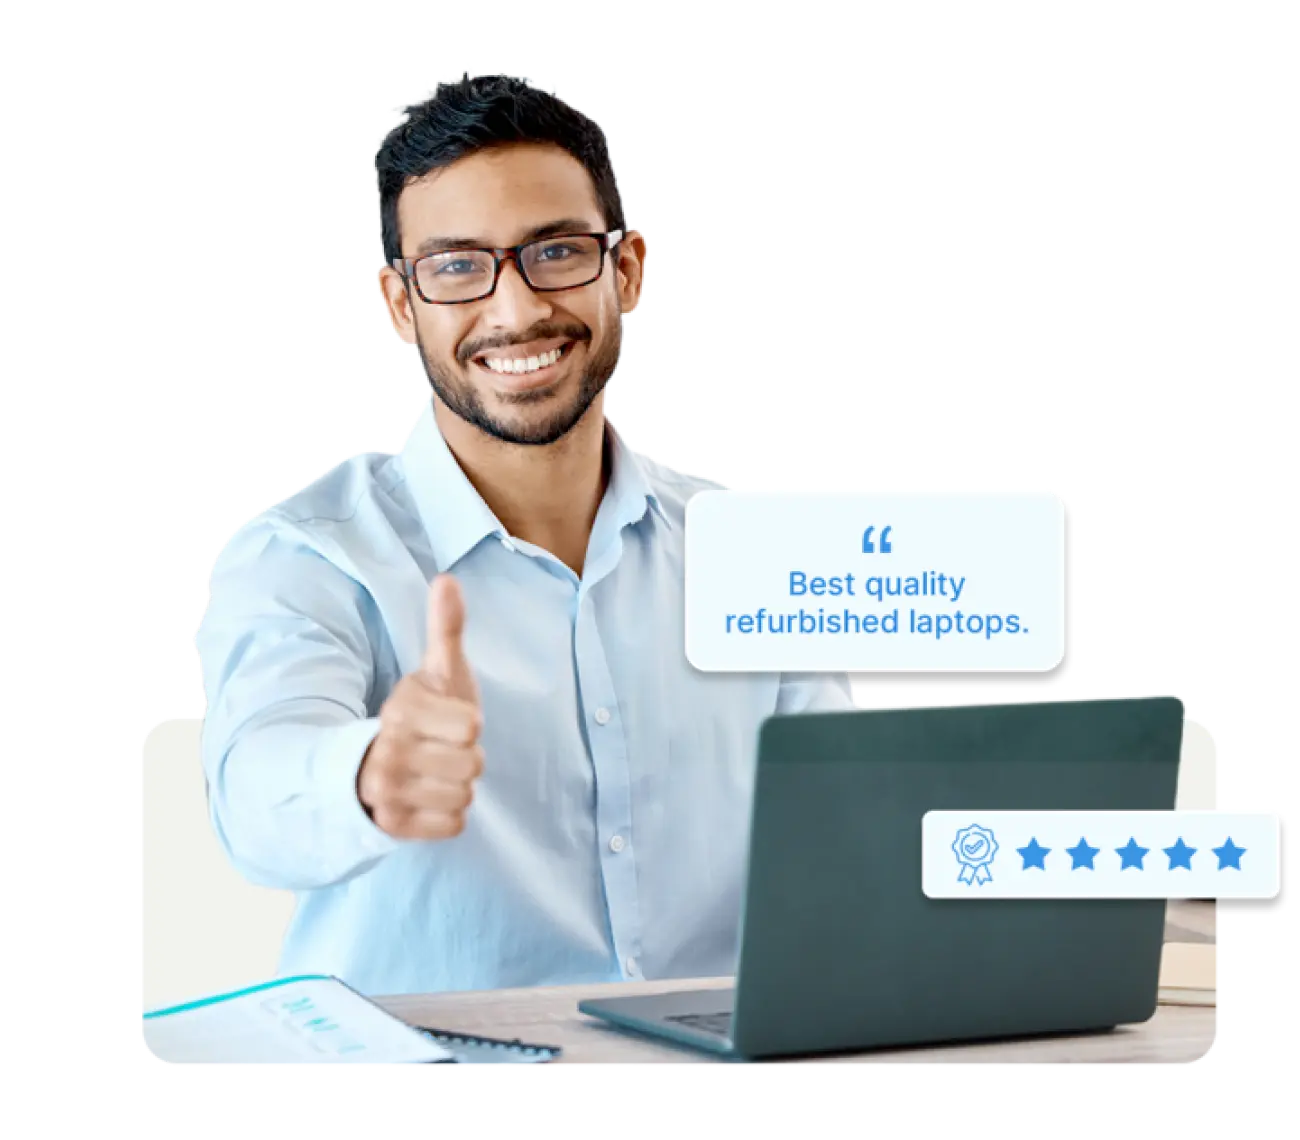 Edify offers Best-Quality Refurbished Laptops